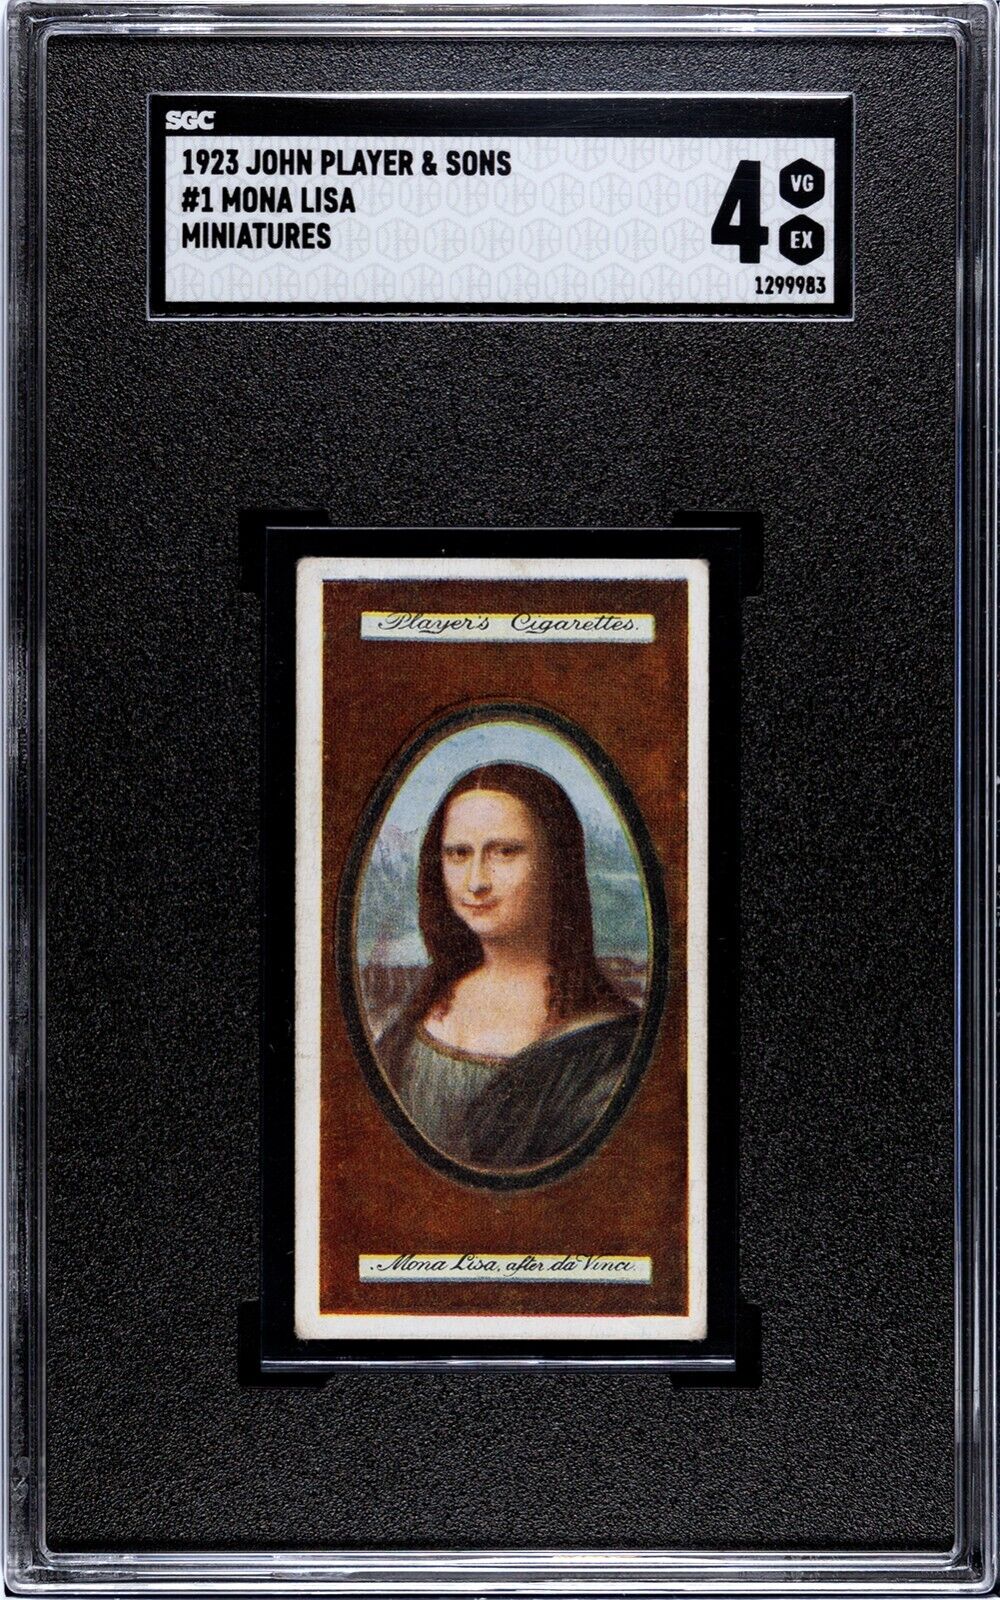 1923 John Playuer & Sons Mona Lisa Cigarette Card SGC 4